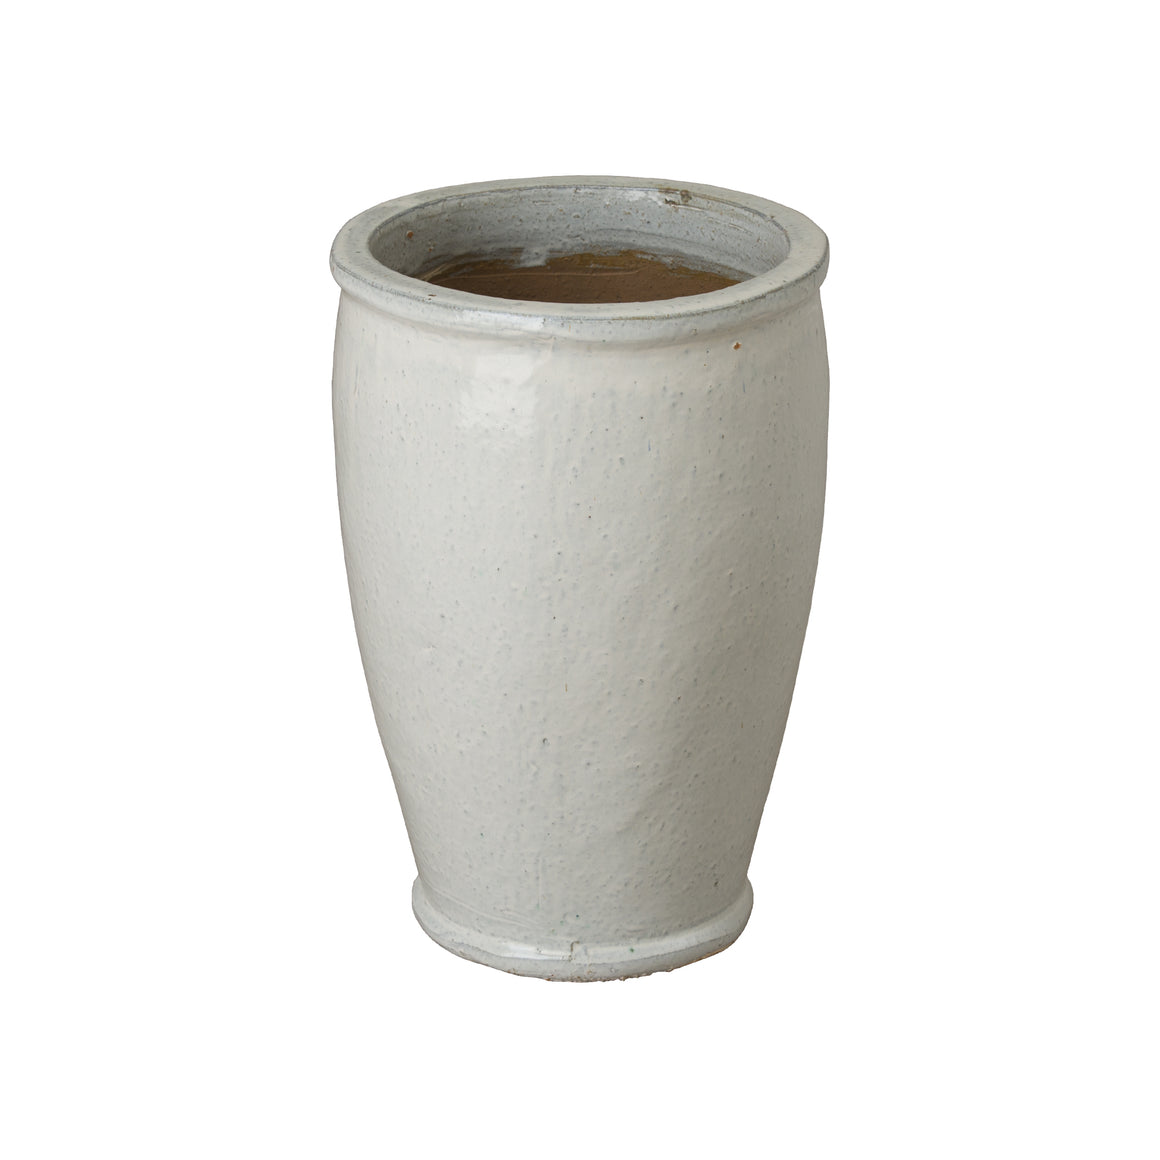 Round Ceramic Rim Planter with a Distressed White Glaze